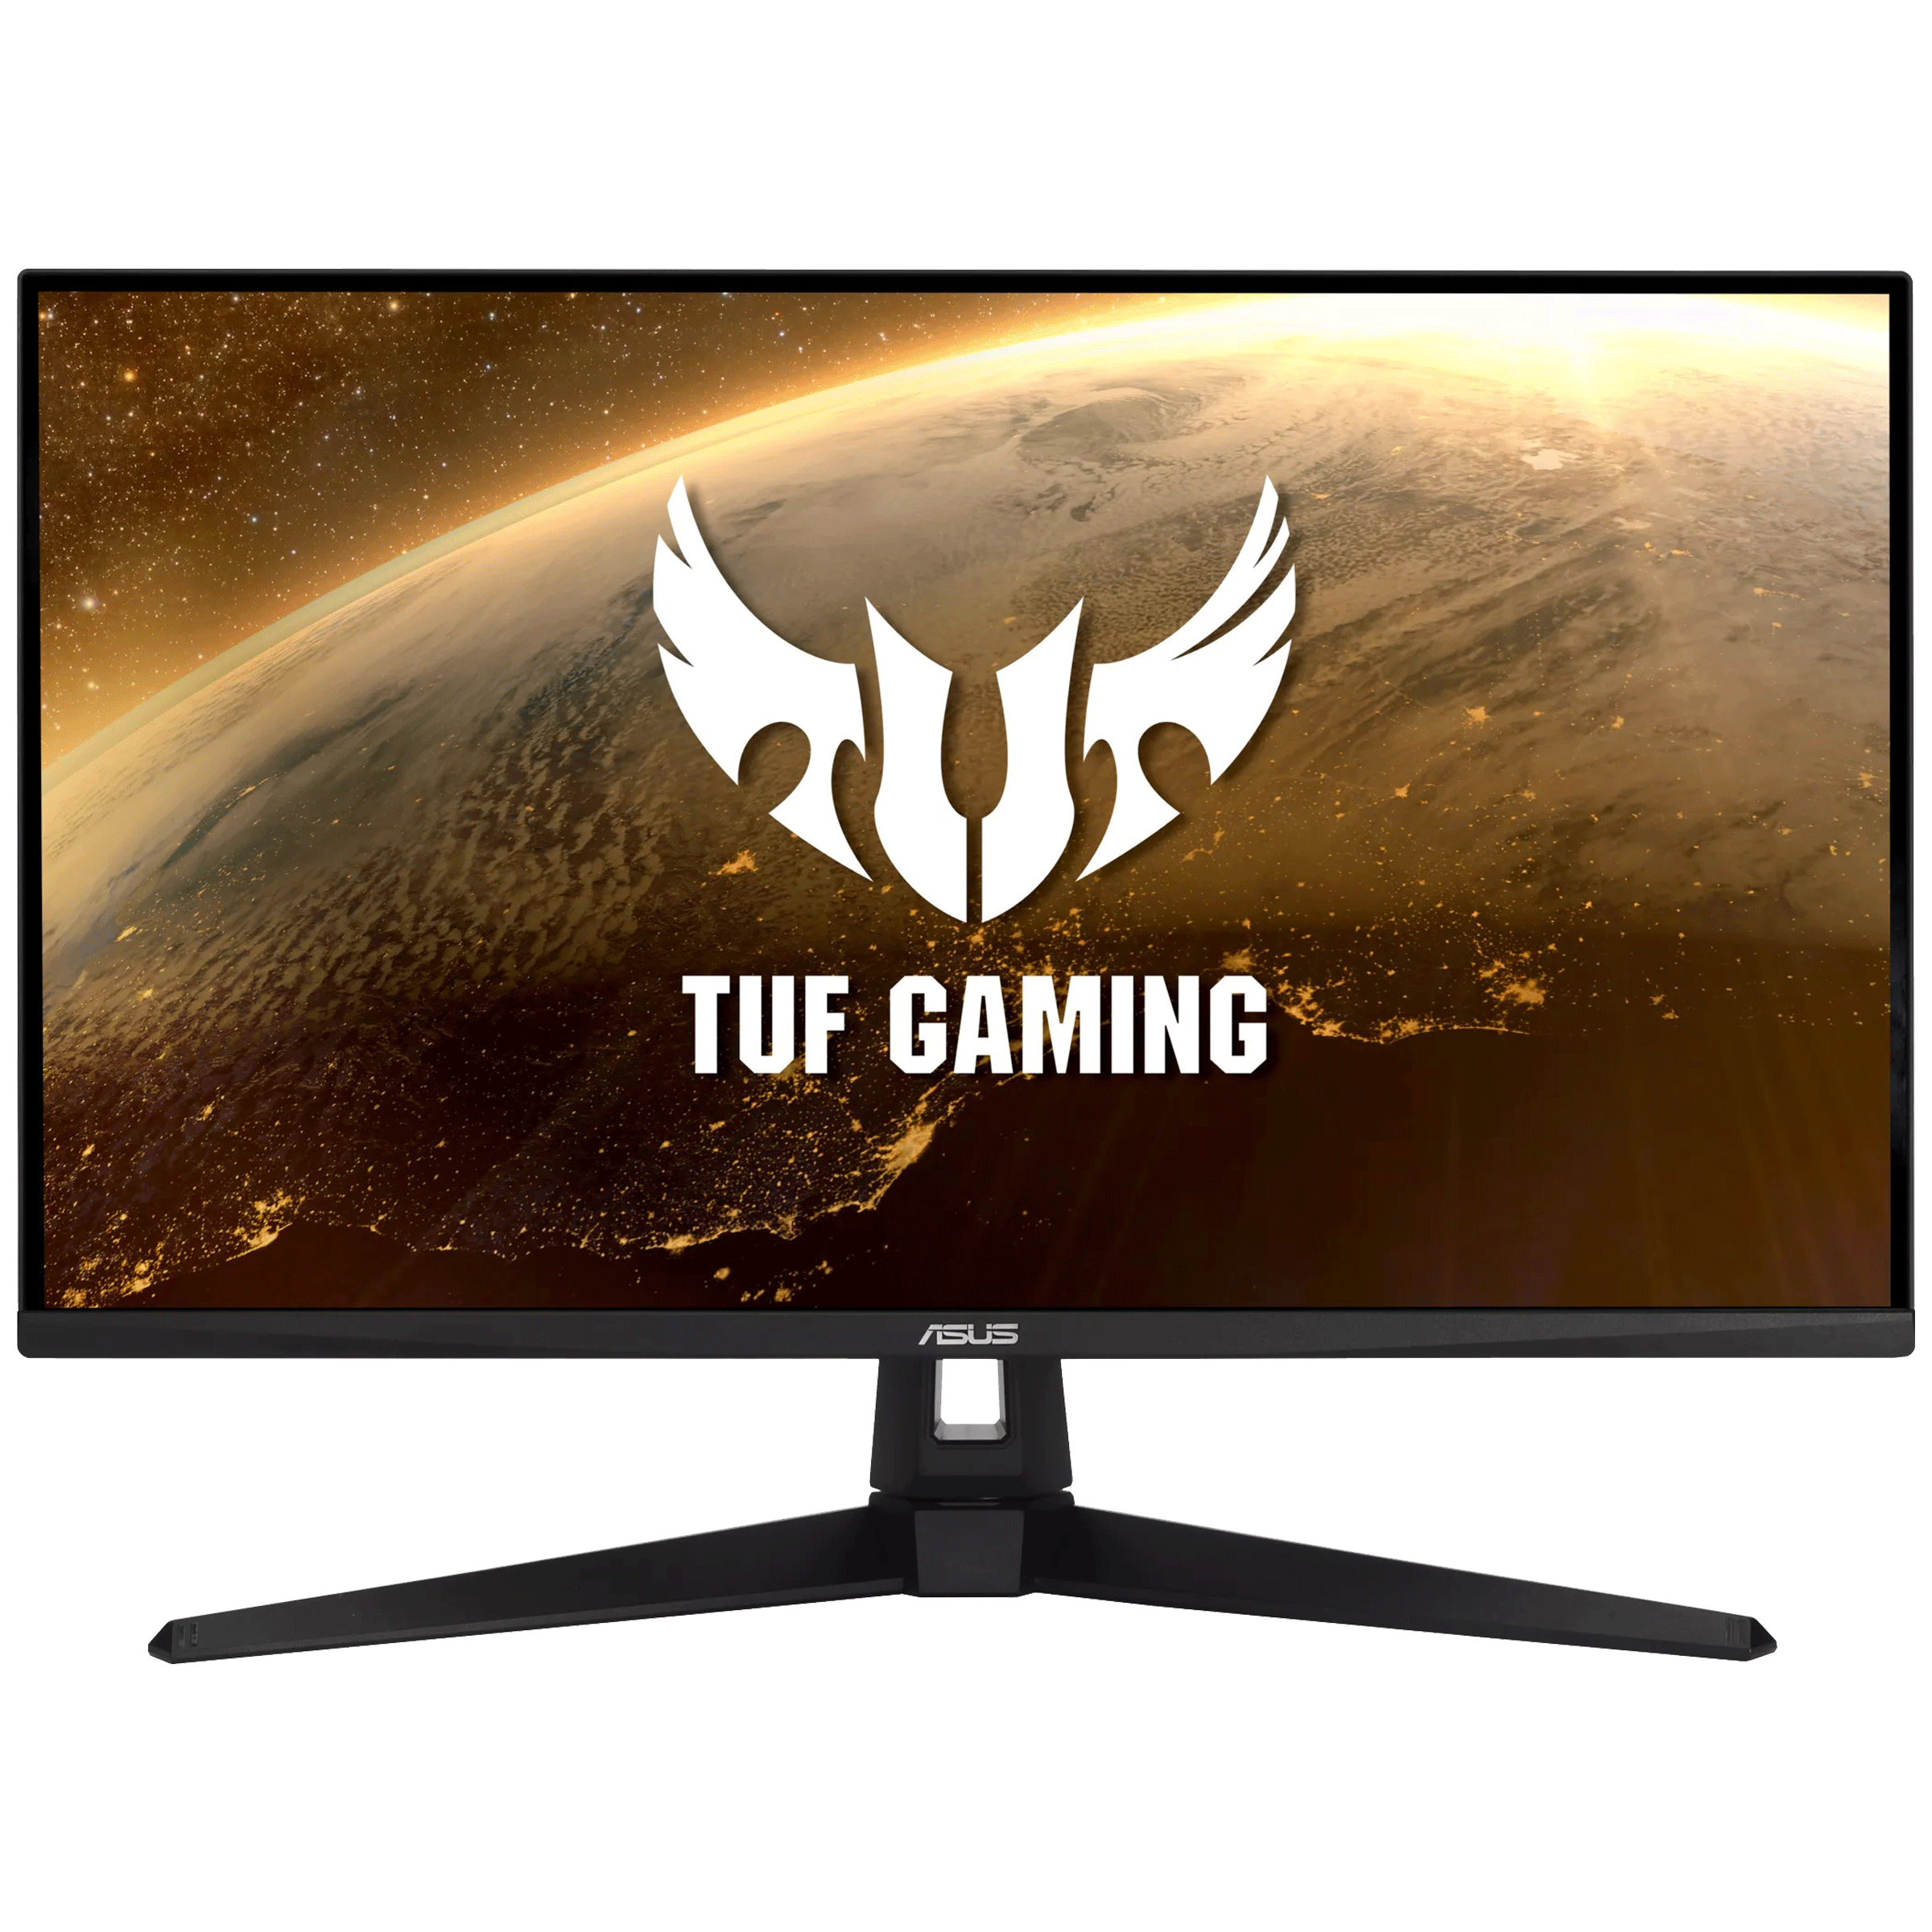 Asus TUF 71.12cm (28 Inches) Ultra HD 4K Flat Panel Gaming Monitor (GameFast Input Technology, HDMI, 144Hz, VG289Q1A, Black)_1